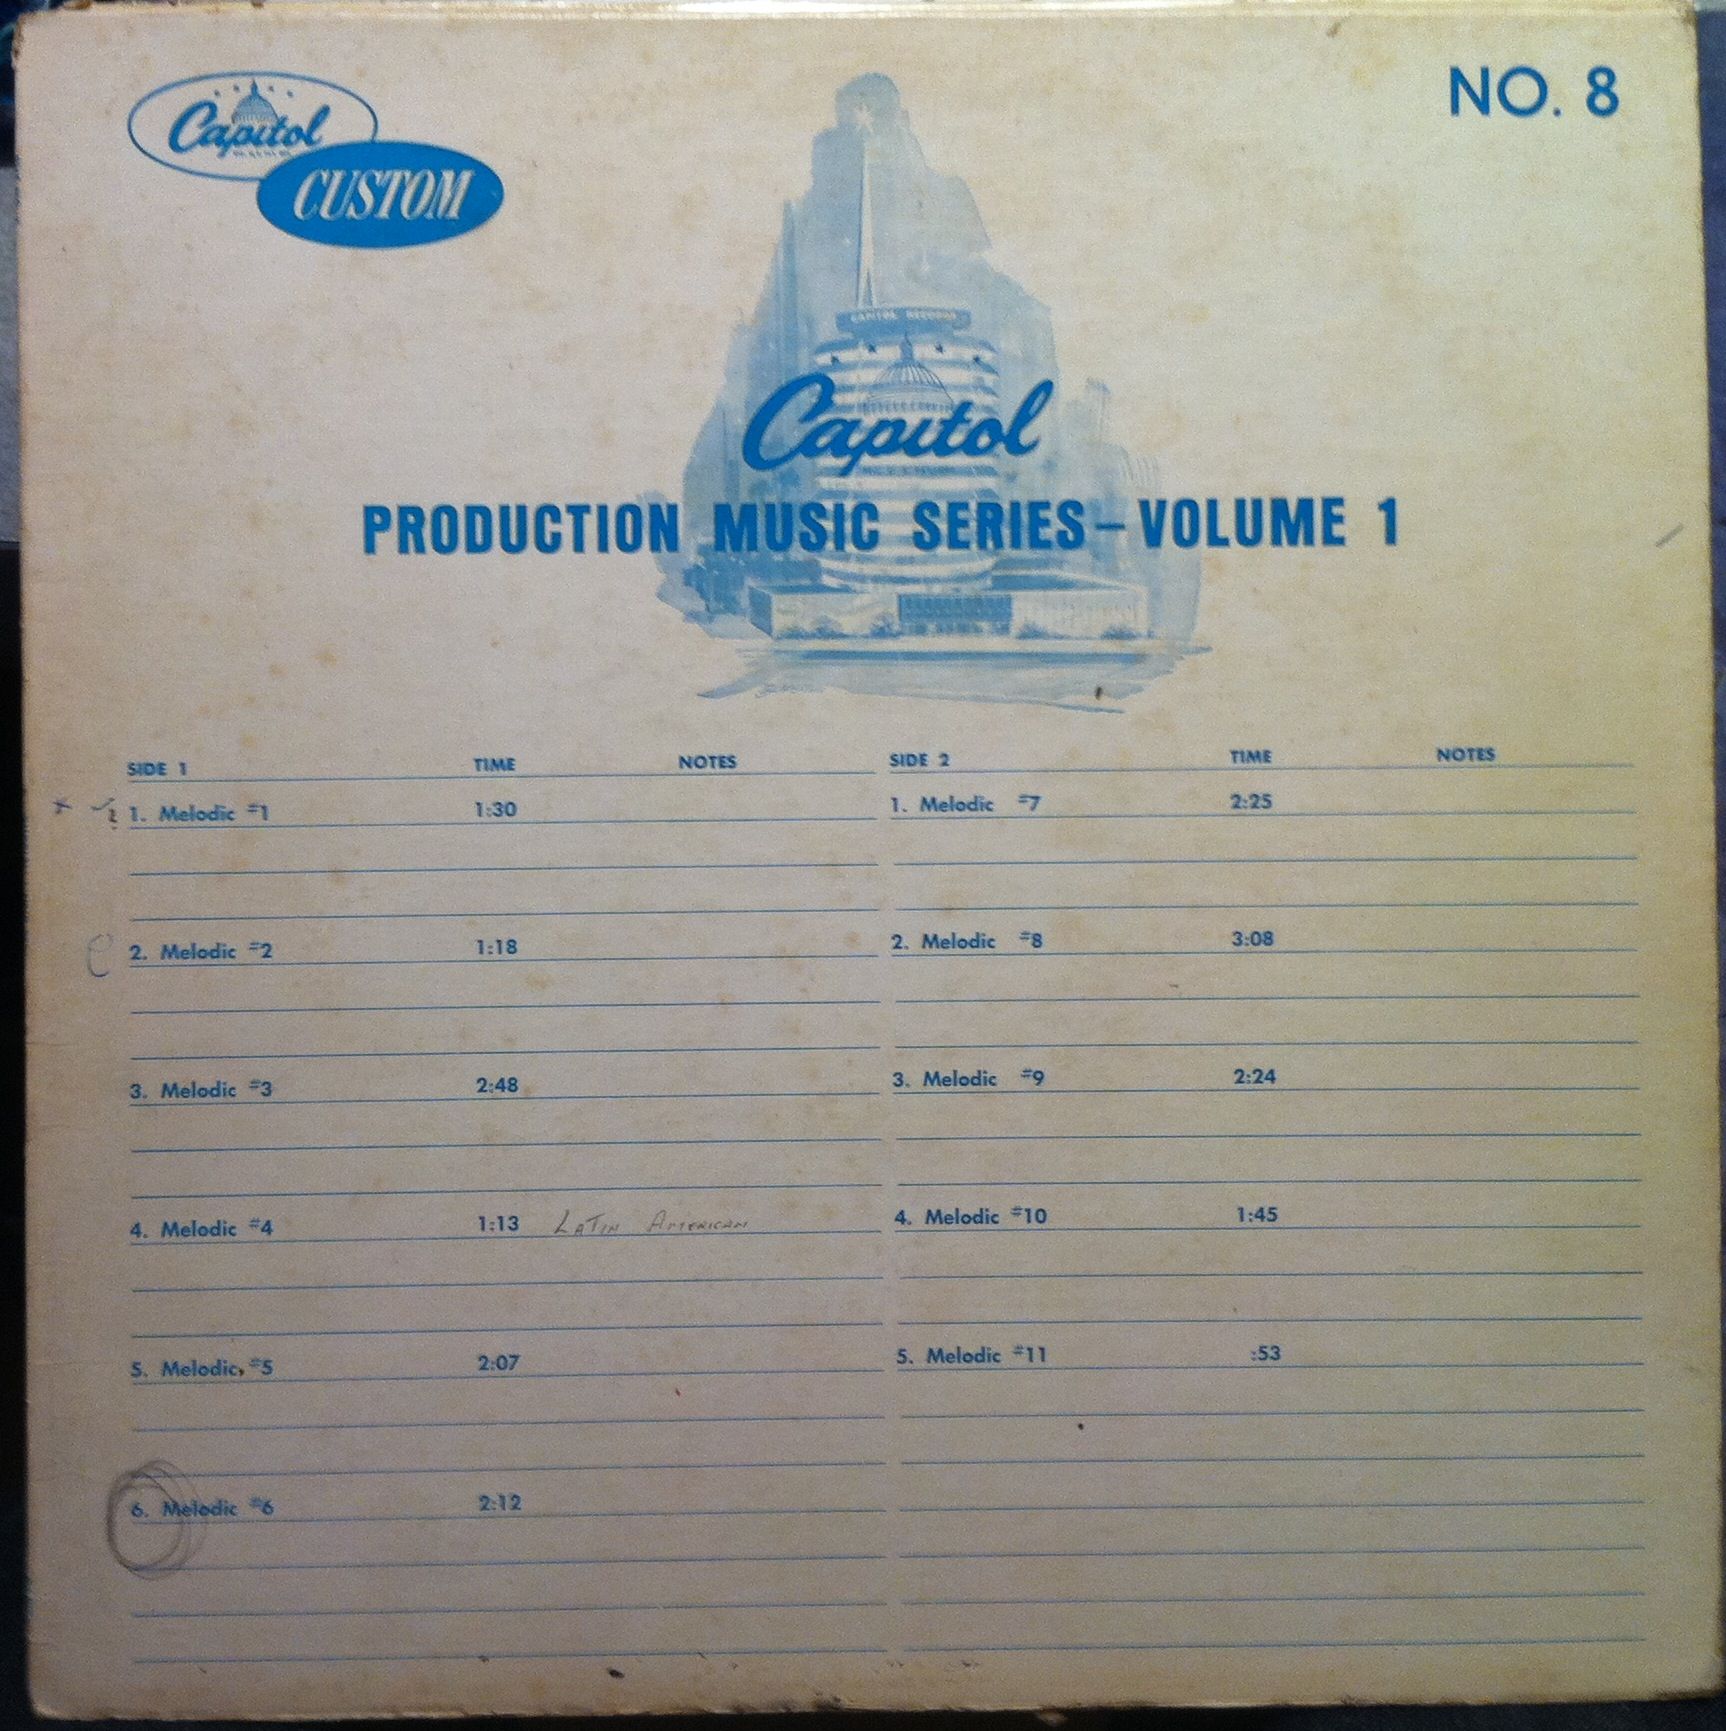 CAPITOL PRODUCTION MUSIC LIBRARY volum 1 no. 8 LP VG PB 2409 Vinyl 